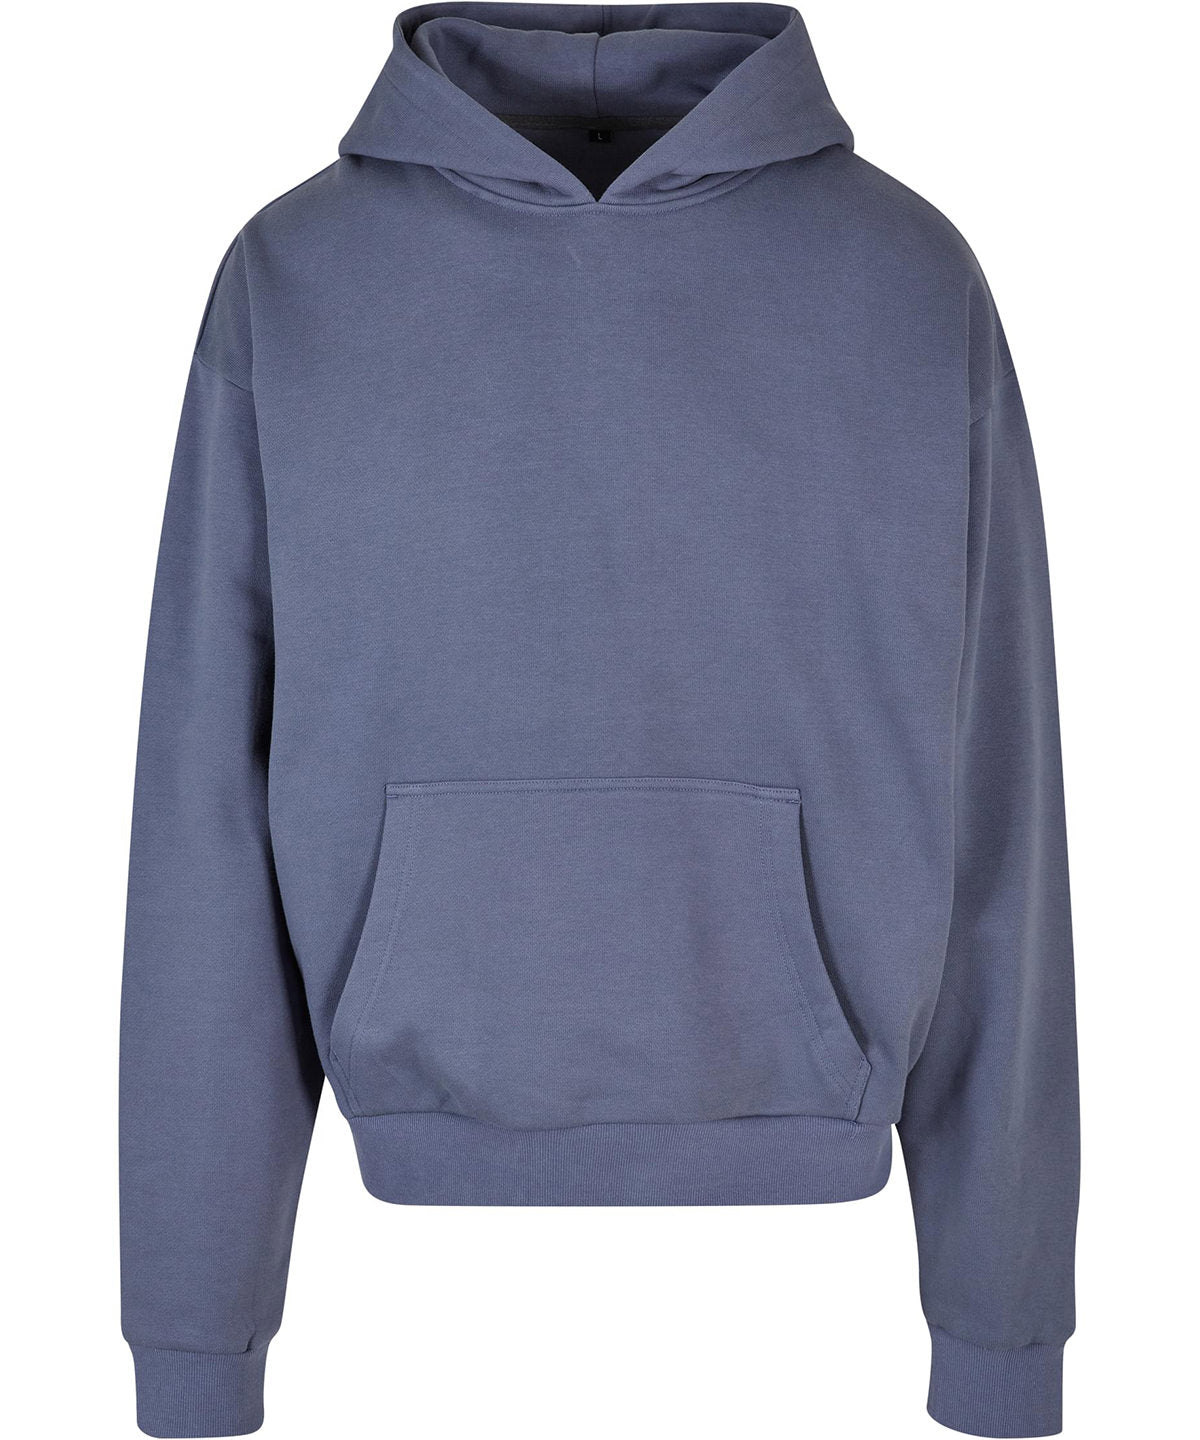 Personalised Hoodies - Light Blue Build Your Brand Ultra heavy hoodie